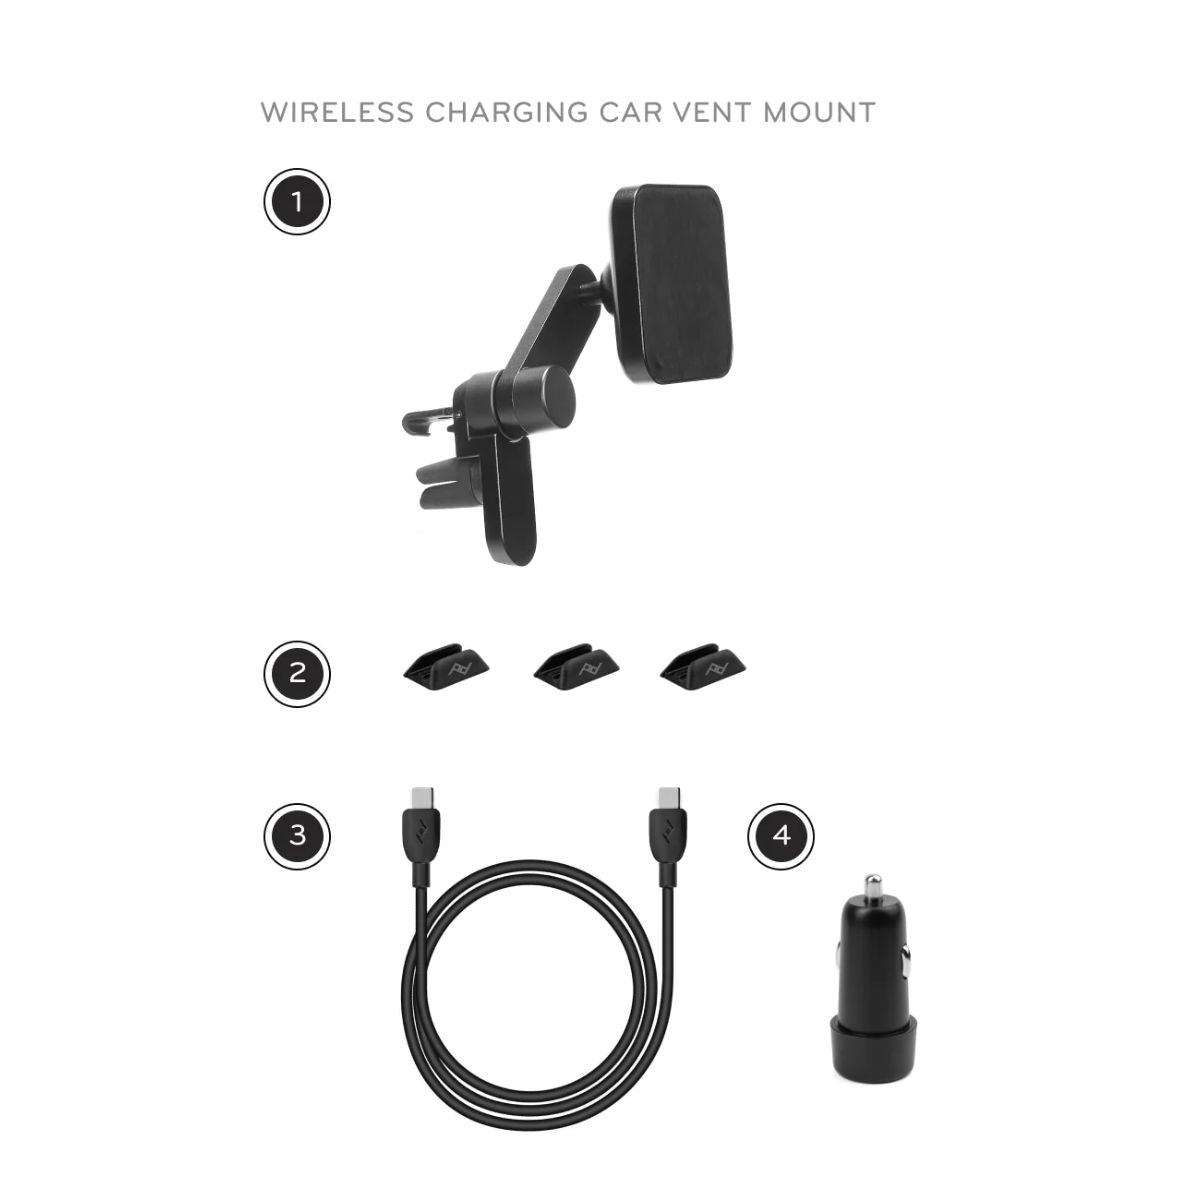  Car Vent Mount - Wireless Charging Model 7